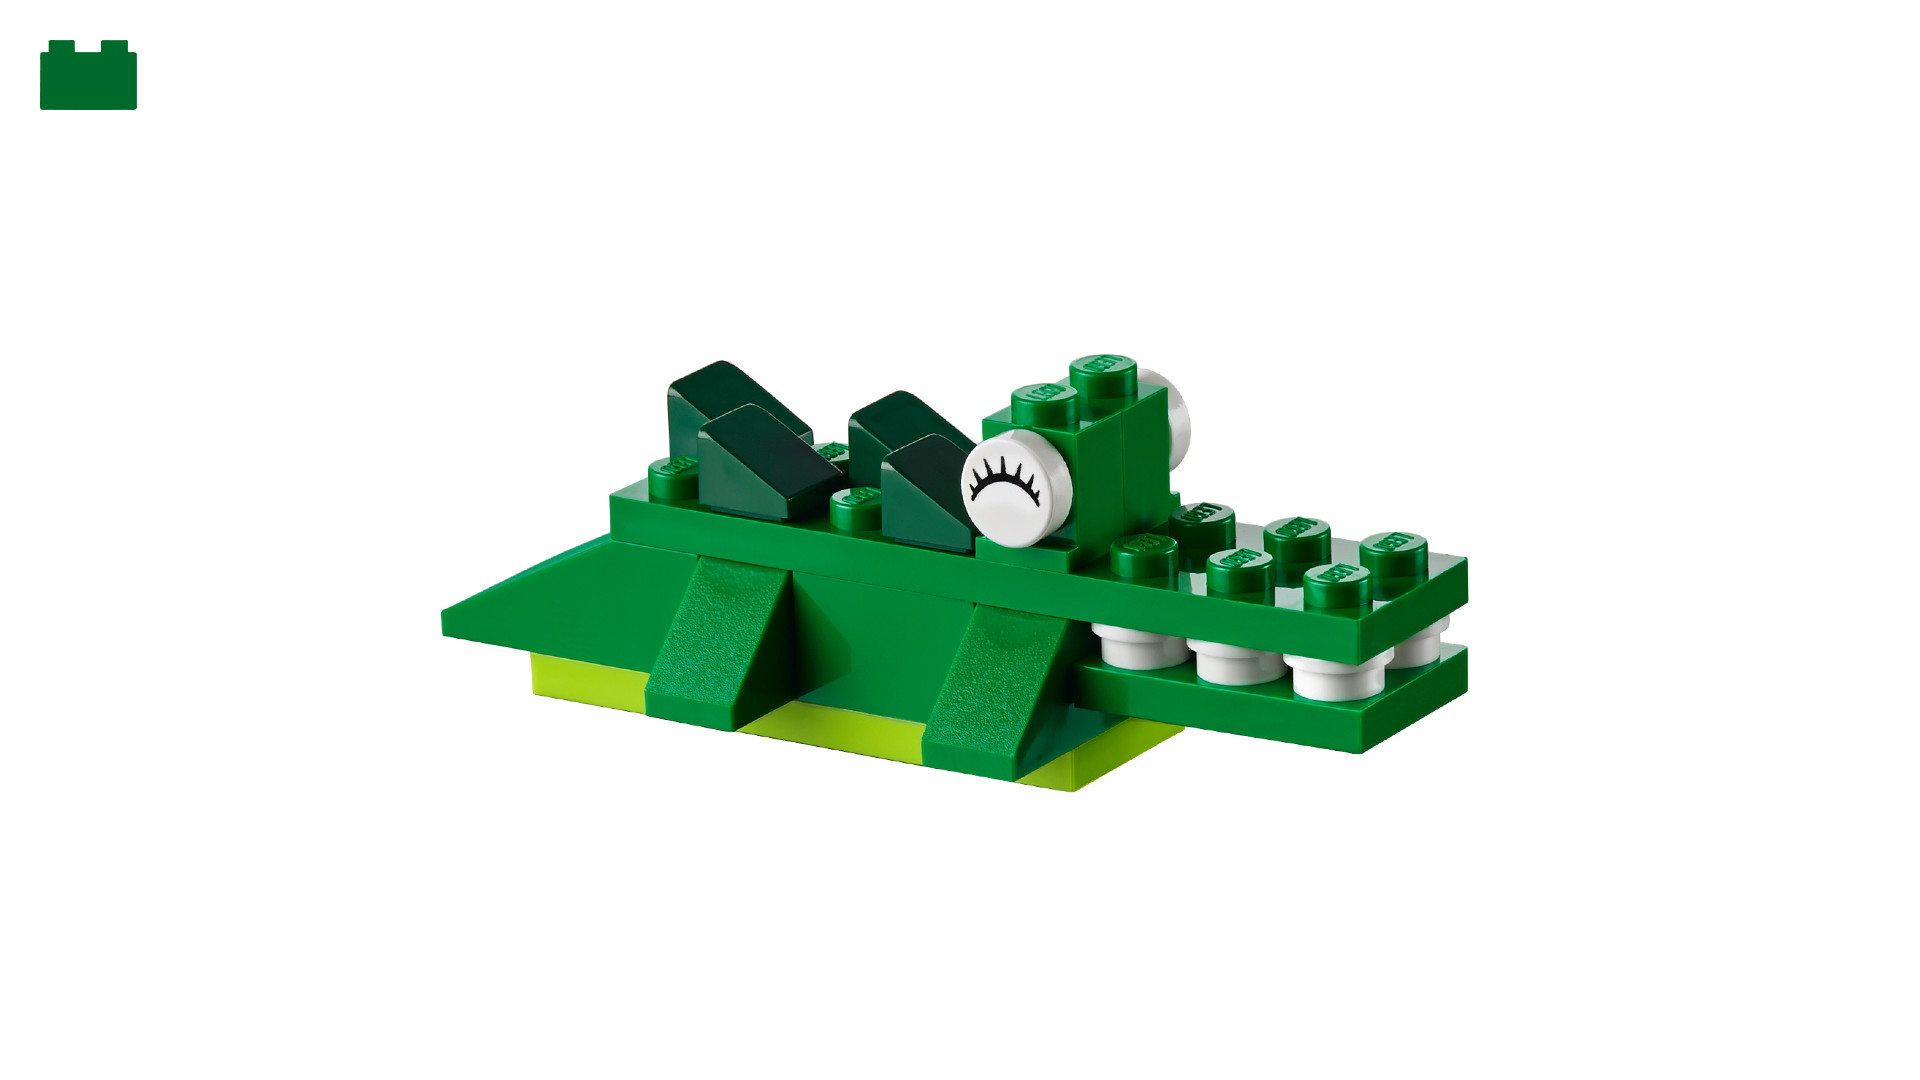 LEGO Classic Medium Creative Brick Box 10696 Building Toys for Creative Play kit 